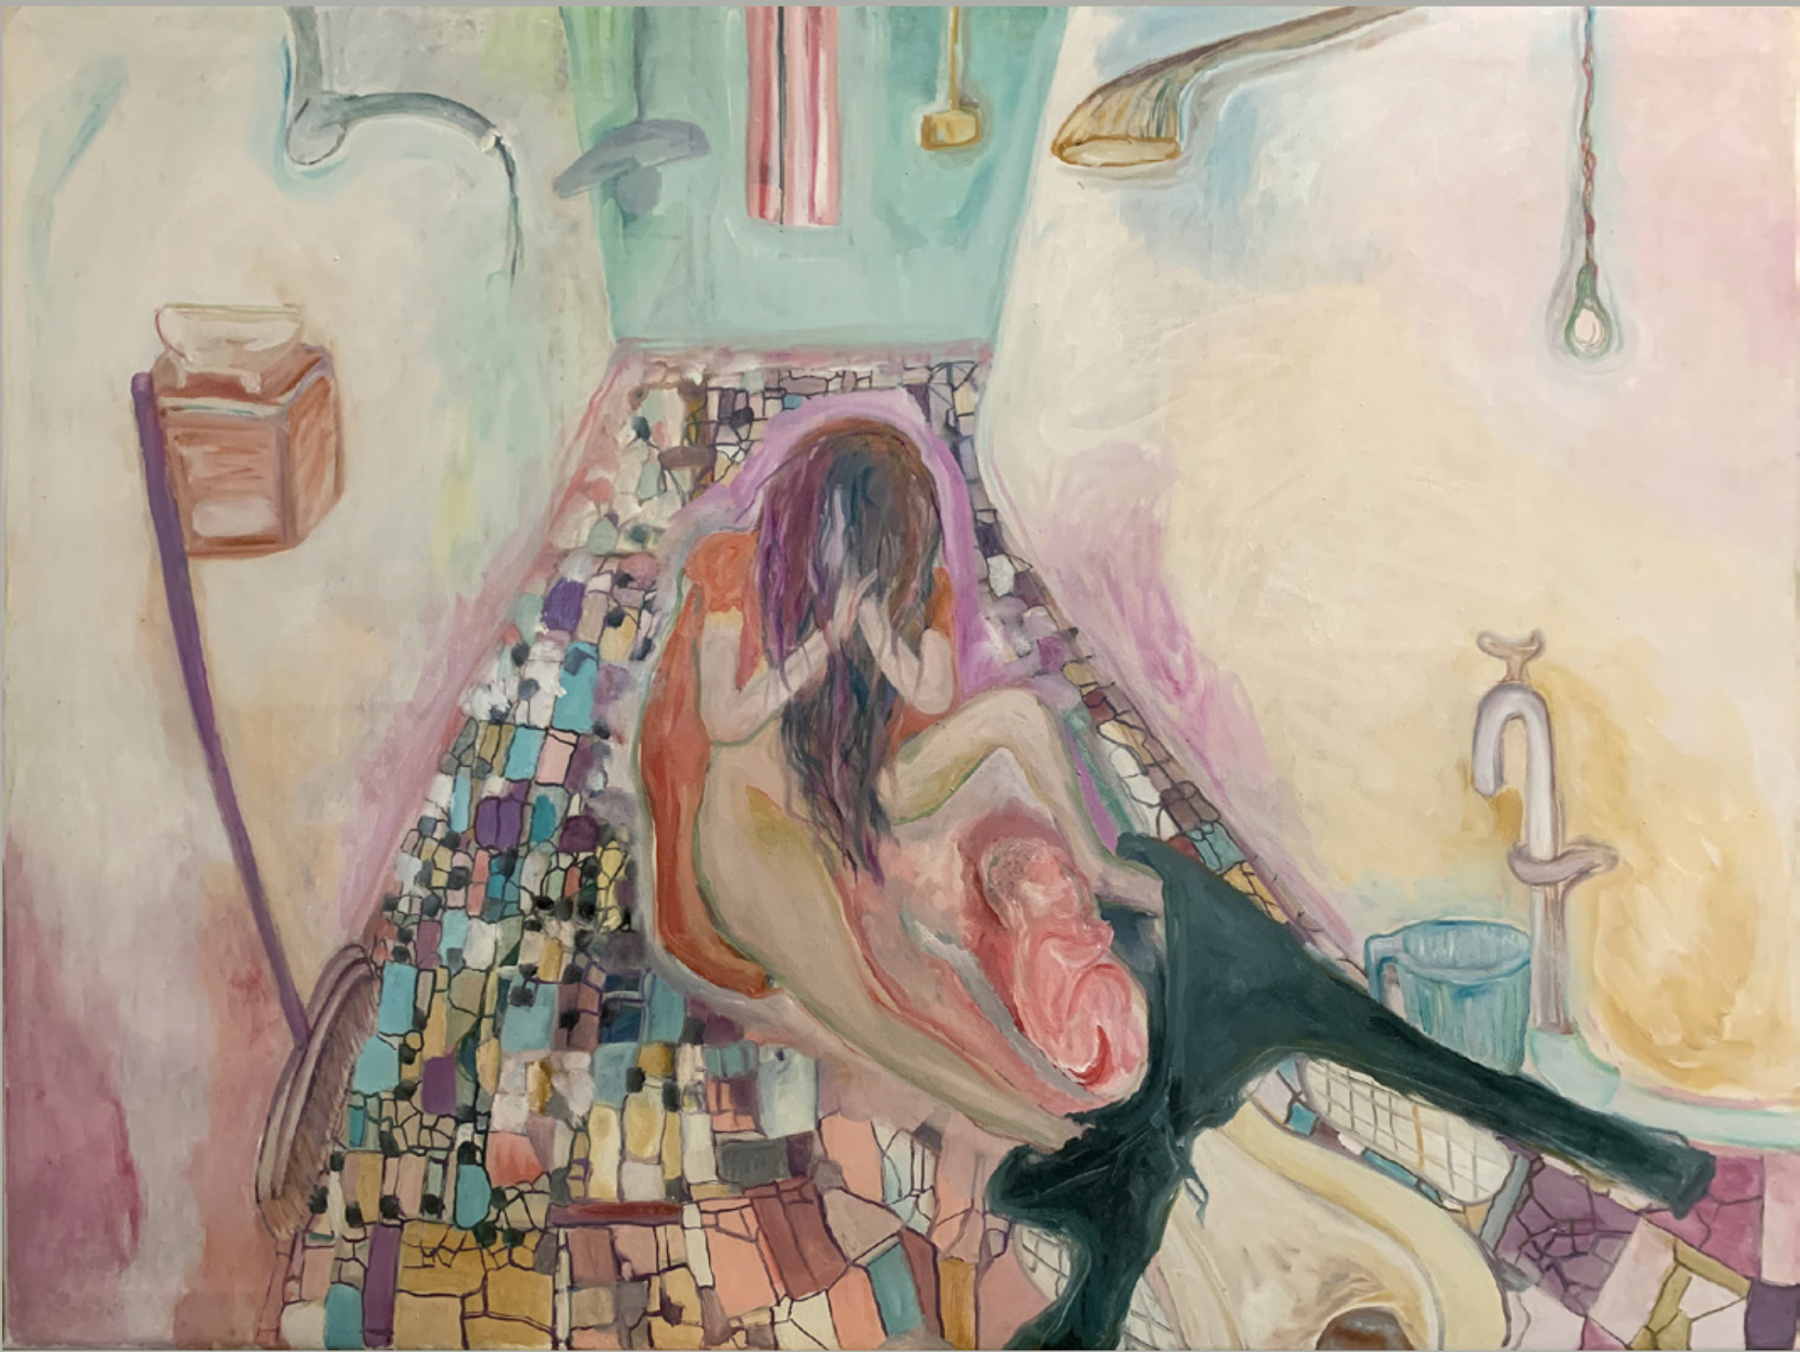 SOSA JOSEPH,&amp;nbsp;Birth,&amp;nbsp;2019, oil on Canvas, 36 x 48 in / 91.4 x 121.9 cm